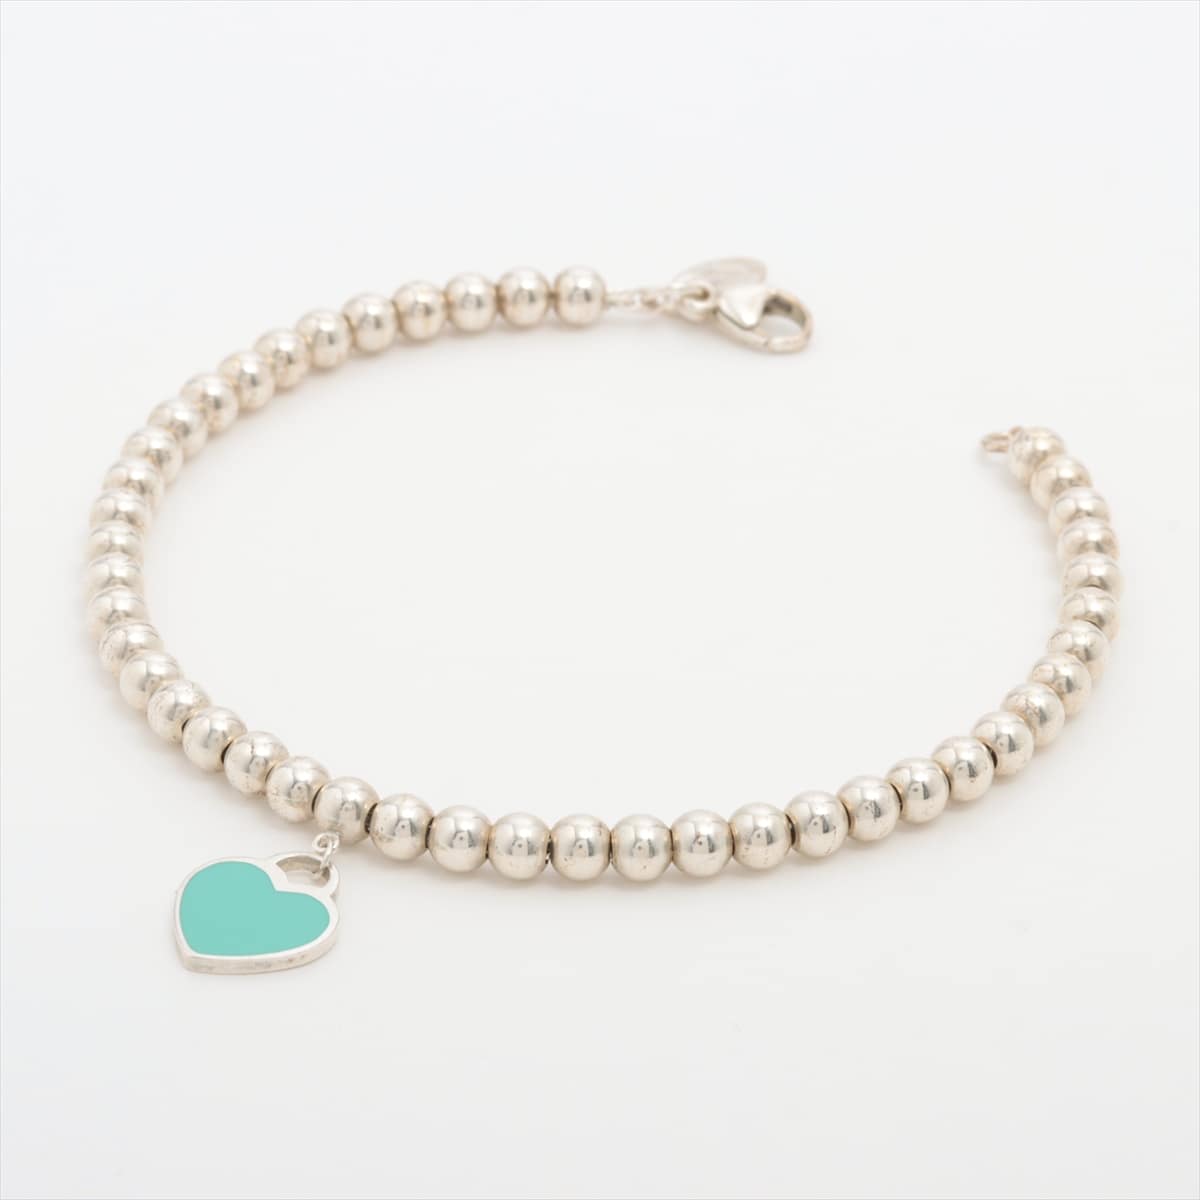 Tiffany Return To Tiffany Heart Tag Bracelet 925 5.7g Silver